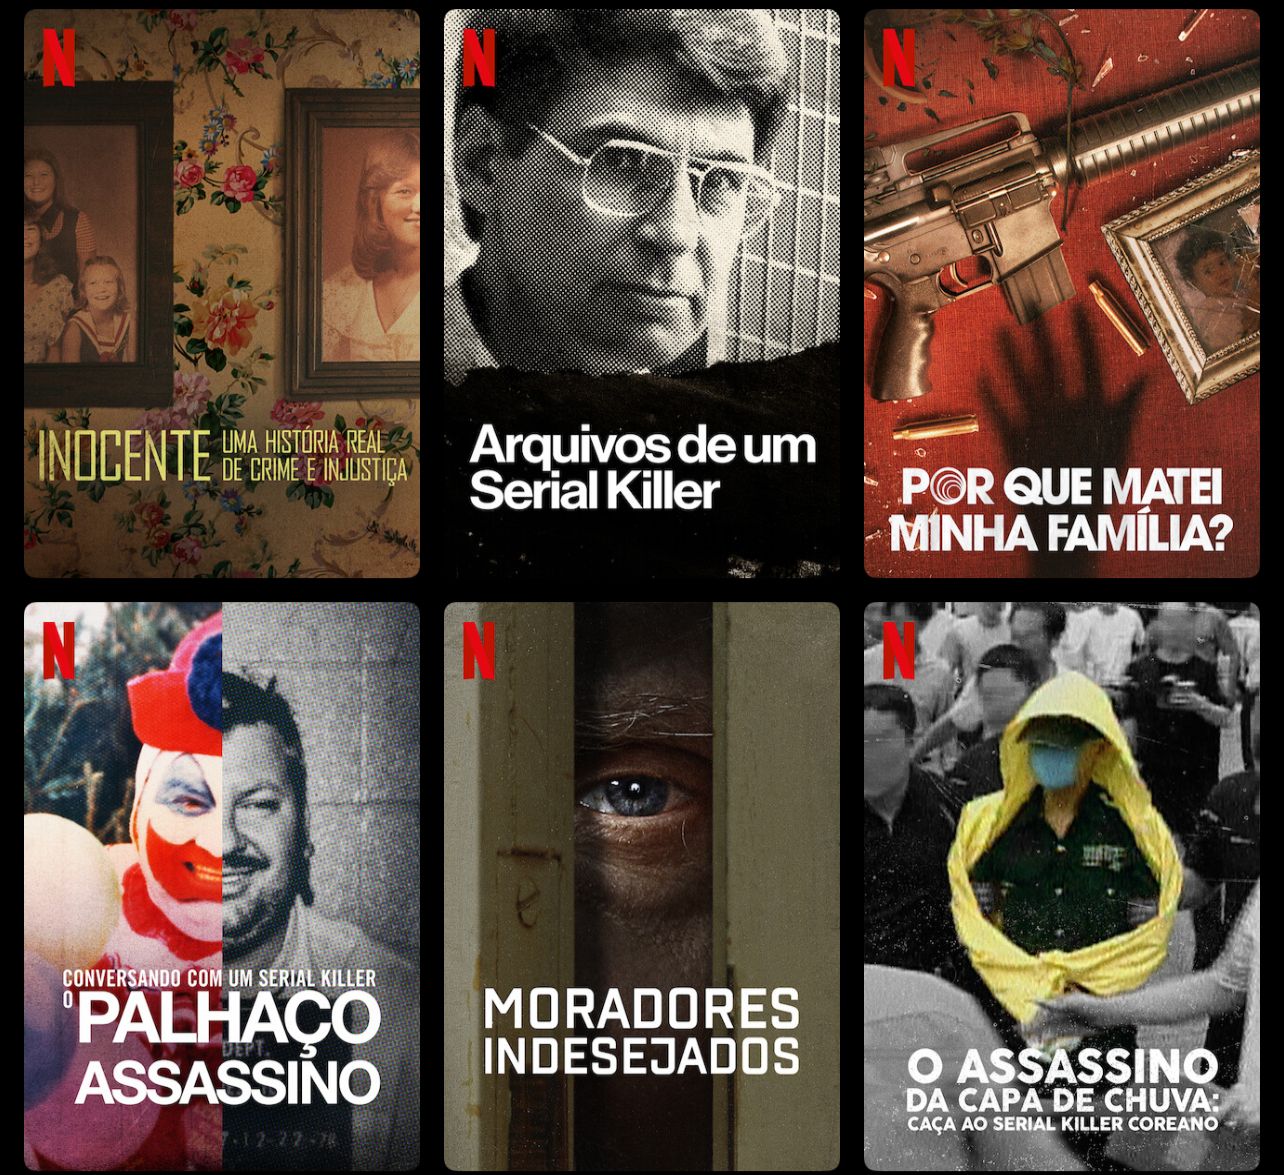 HBO Max Brasil on X: Serial killers, fantasmas, crimes e eu